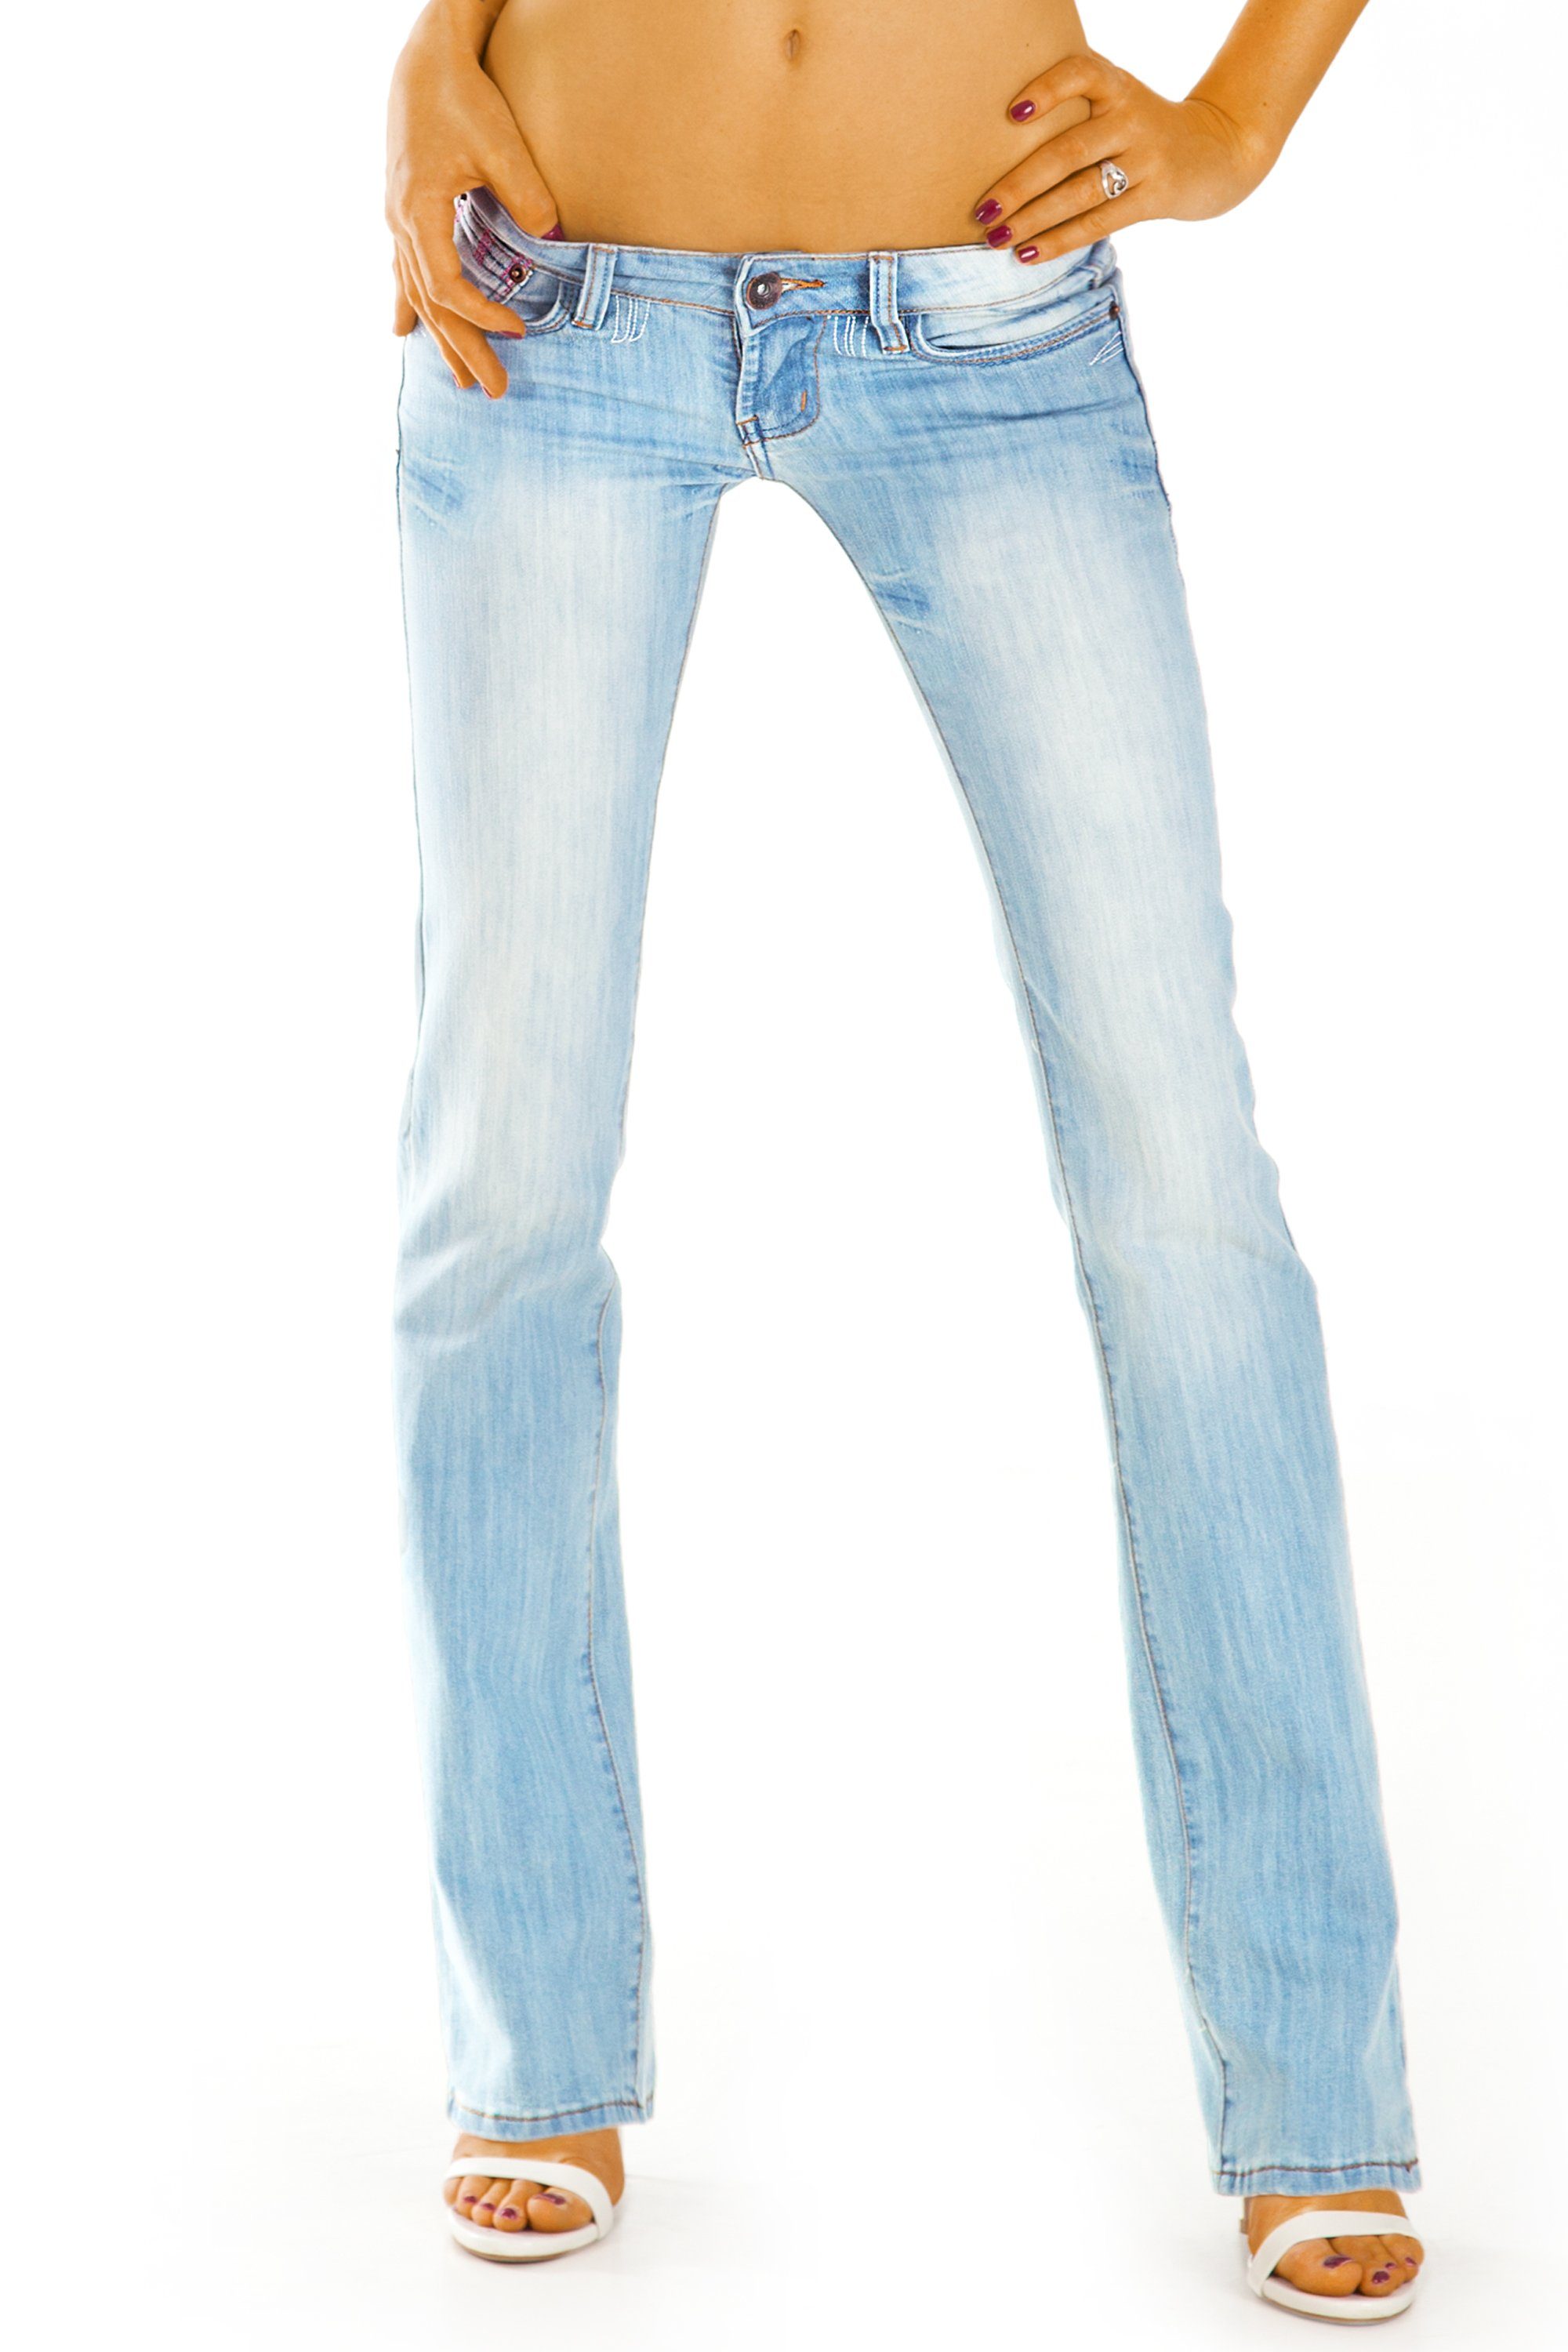 tiefer 5-pOcket-Style Stretch-Anteil, Leibhöhe, Bootcut - extrem Leibhöhe - styled Bootcut-Jeans Jeanshose sehr Damen j37a-1 be mit Hüftjeans niedrige